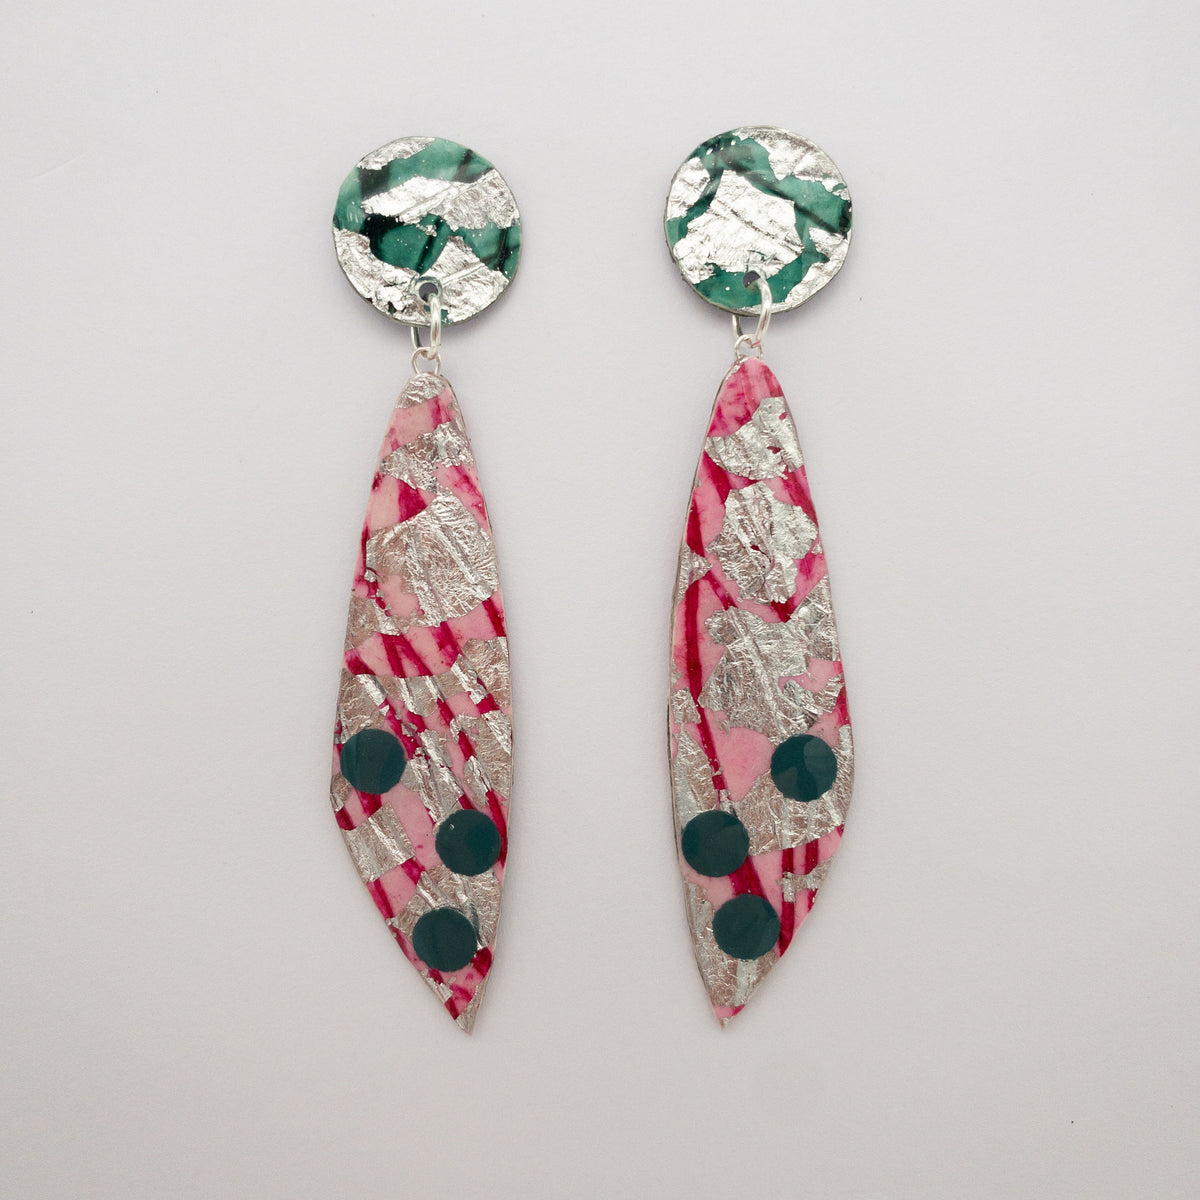 Moondrifter sgraffito textile earrings in silver/pink/jade